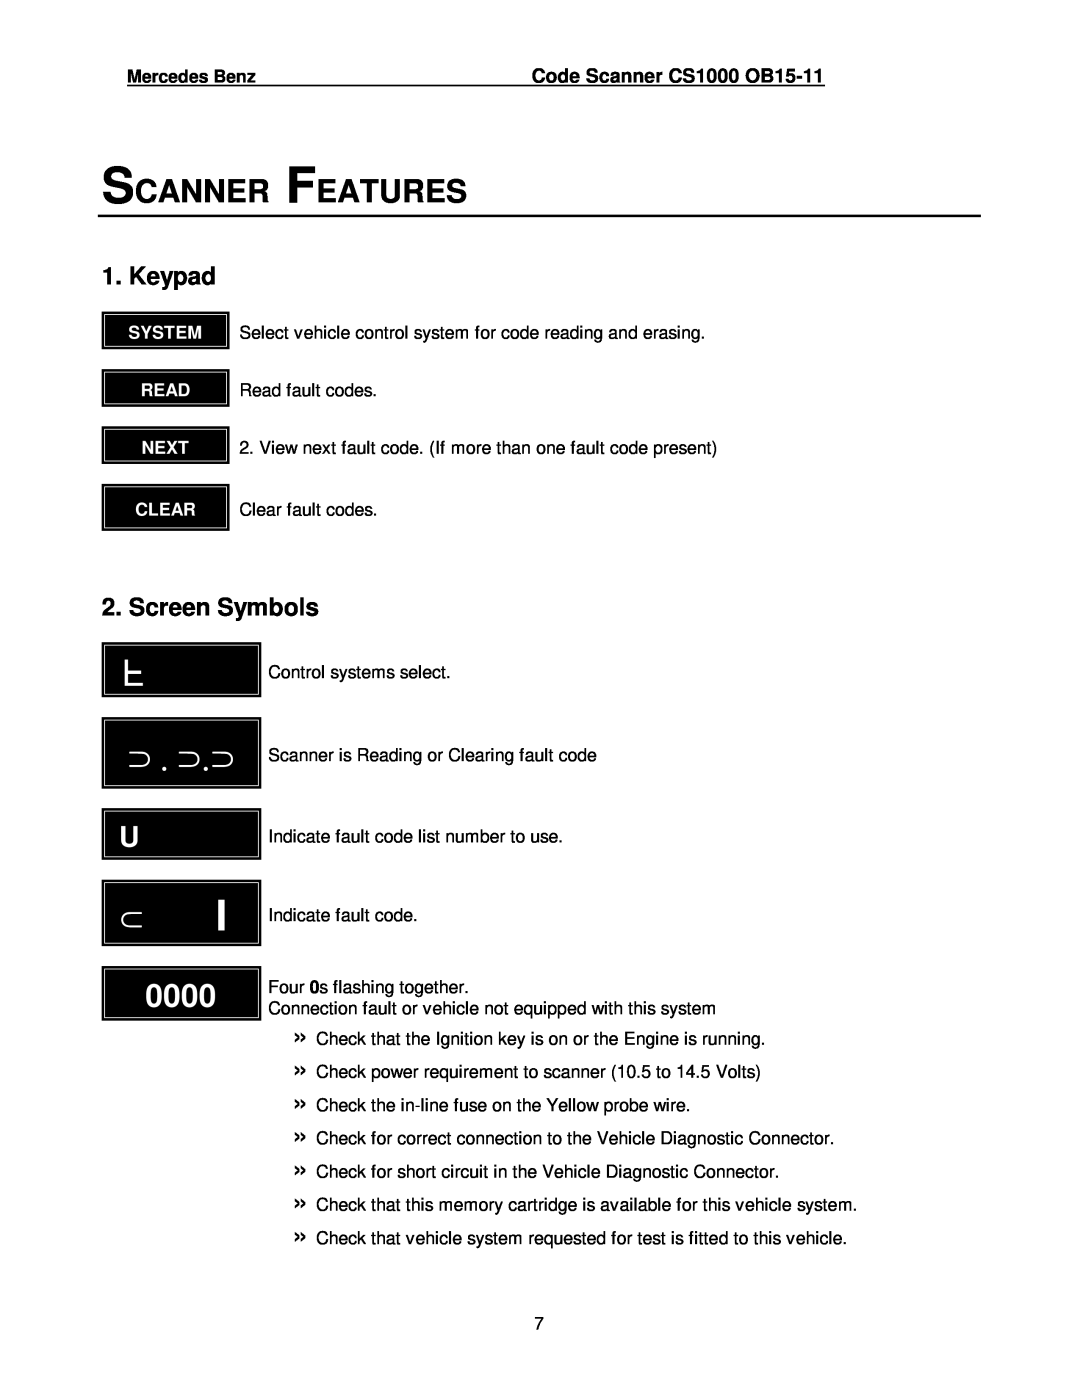 Mercedes-Benz Scanner Features, Keypad, Screen Symbols, 0000, Code Scanner CS1000 OB15-11, Mercedes Benz, System, Read 